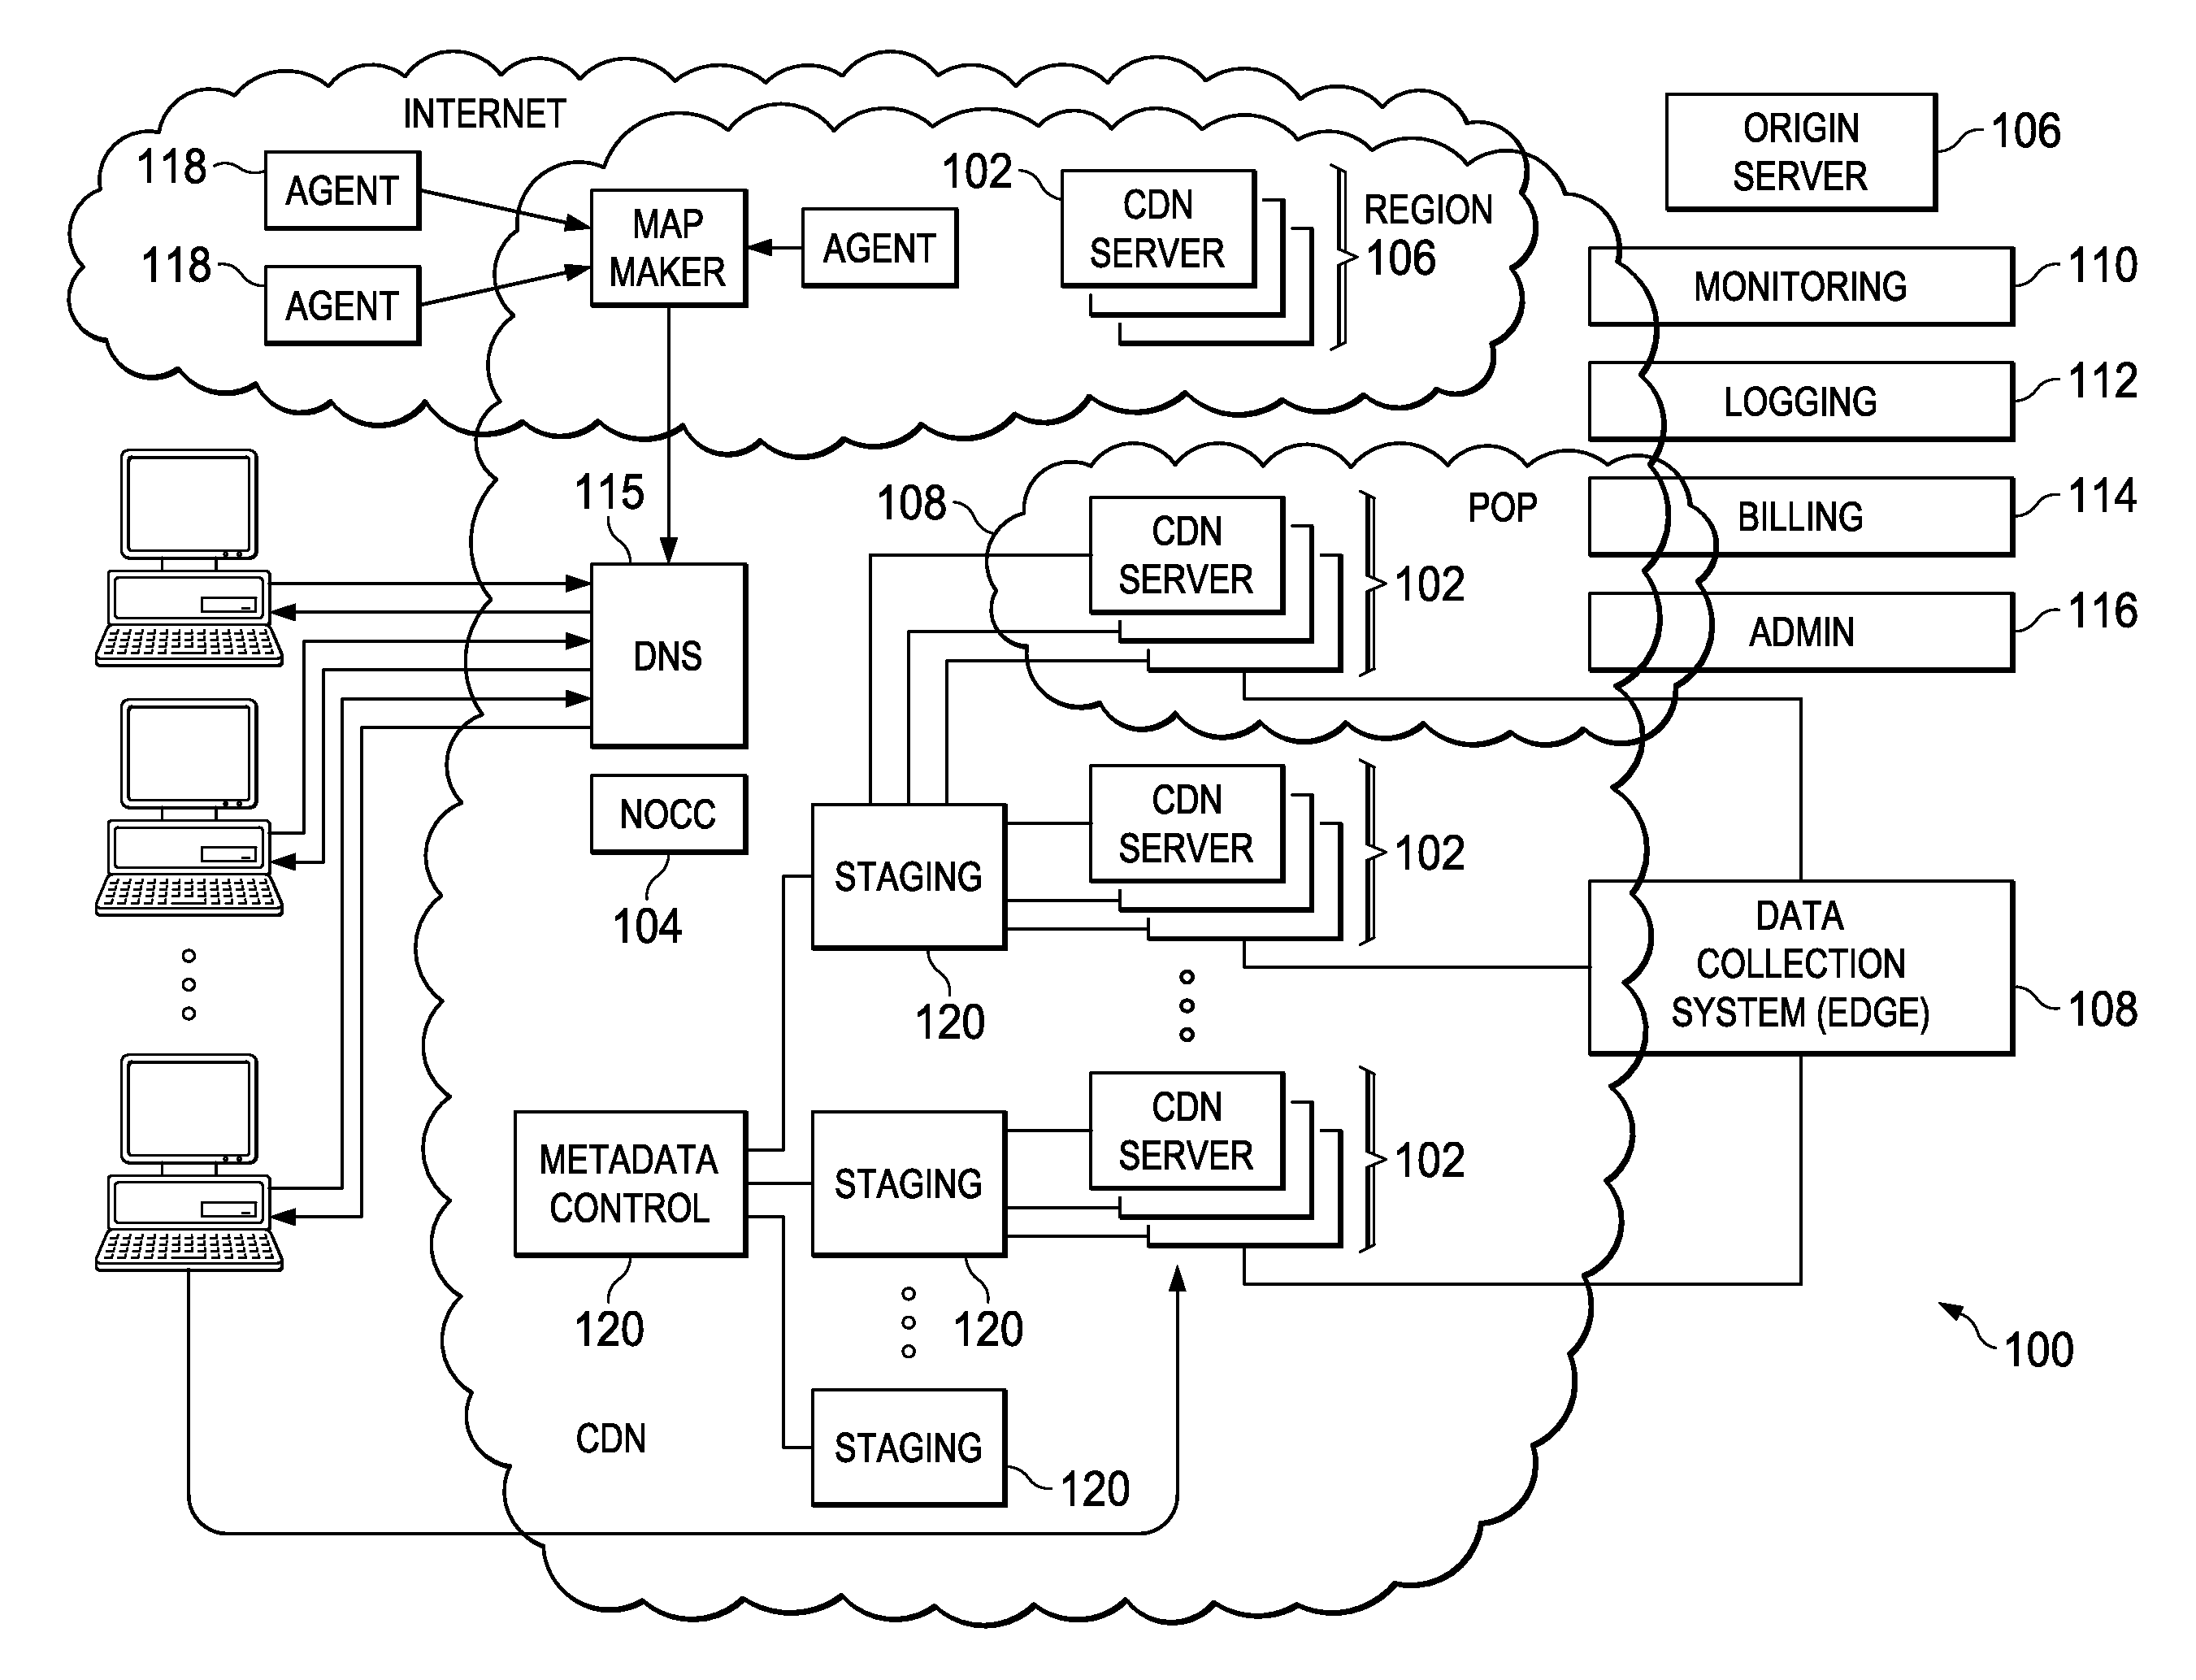 Multi-domain configuration handling in an edge network server